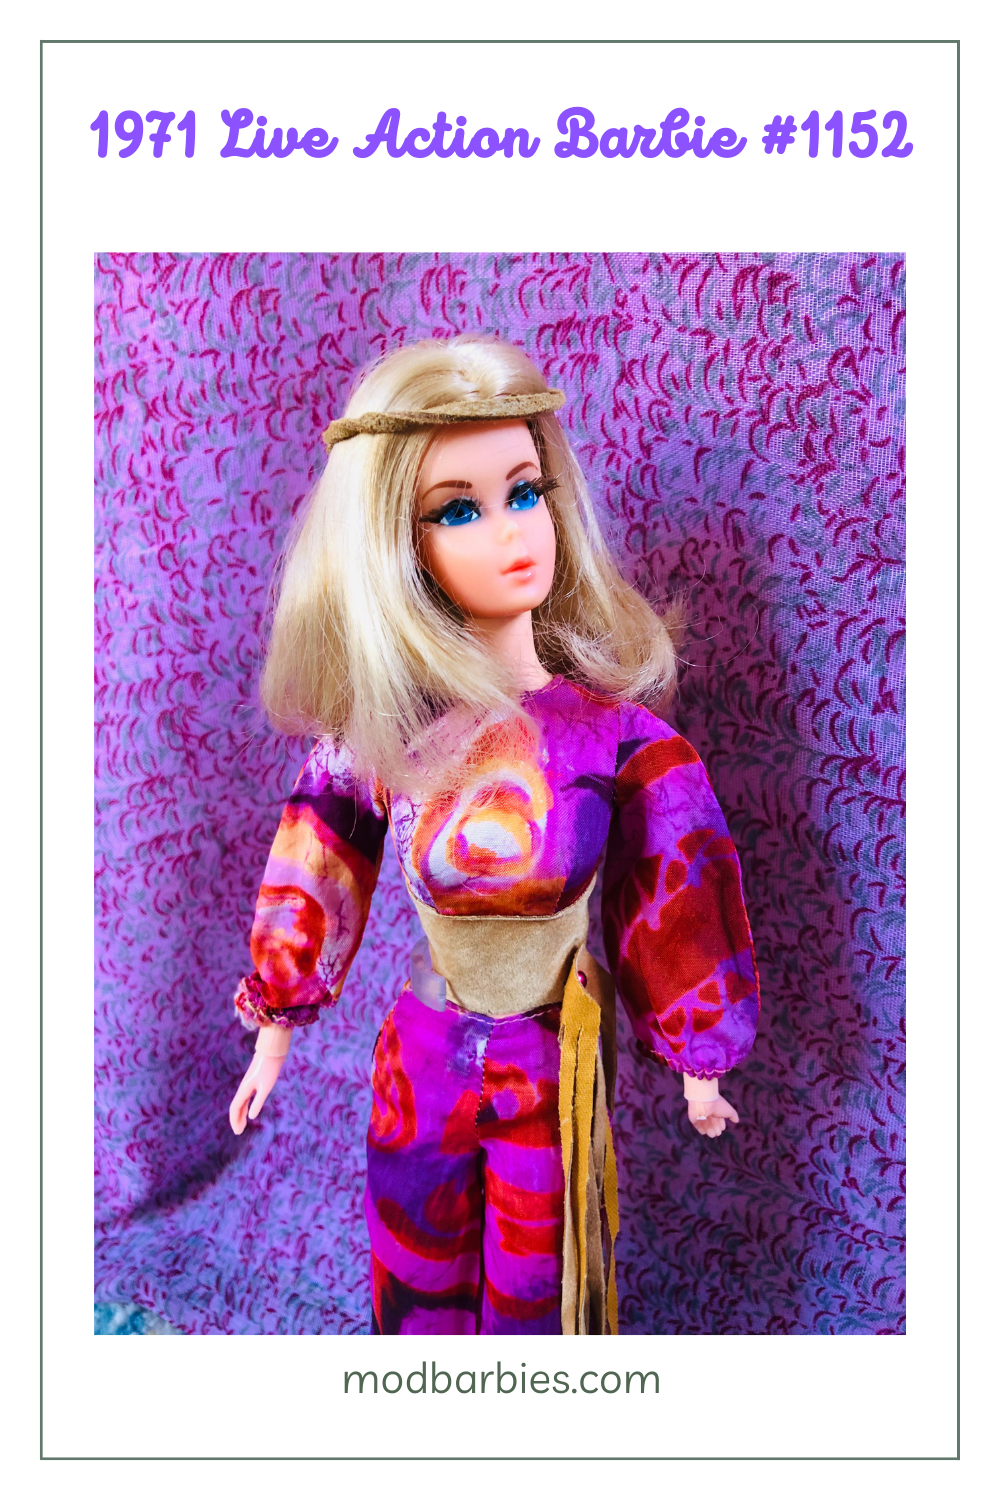 1971 Live Action Barbie doll